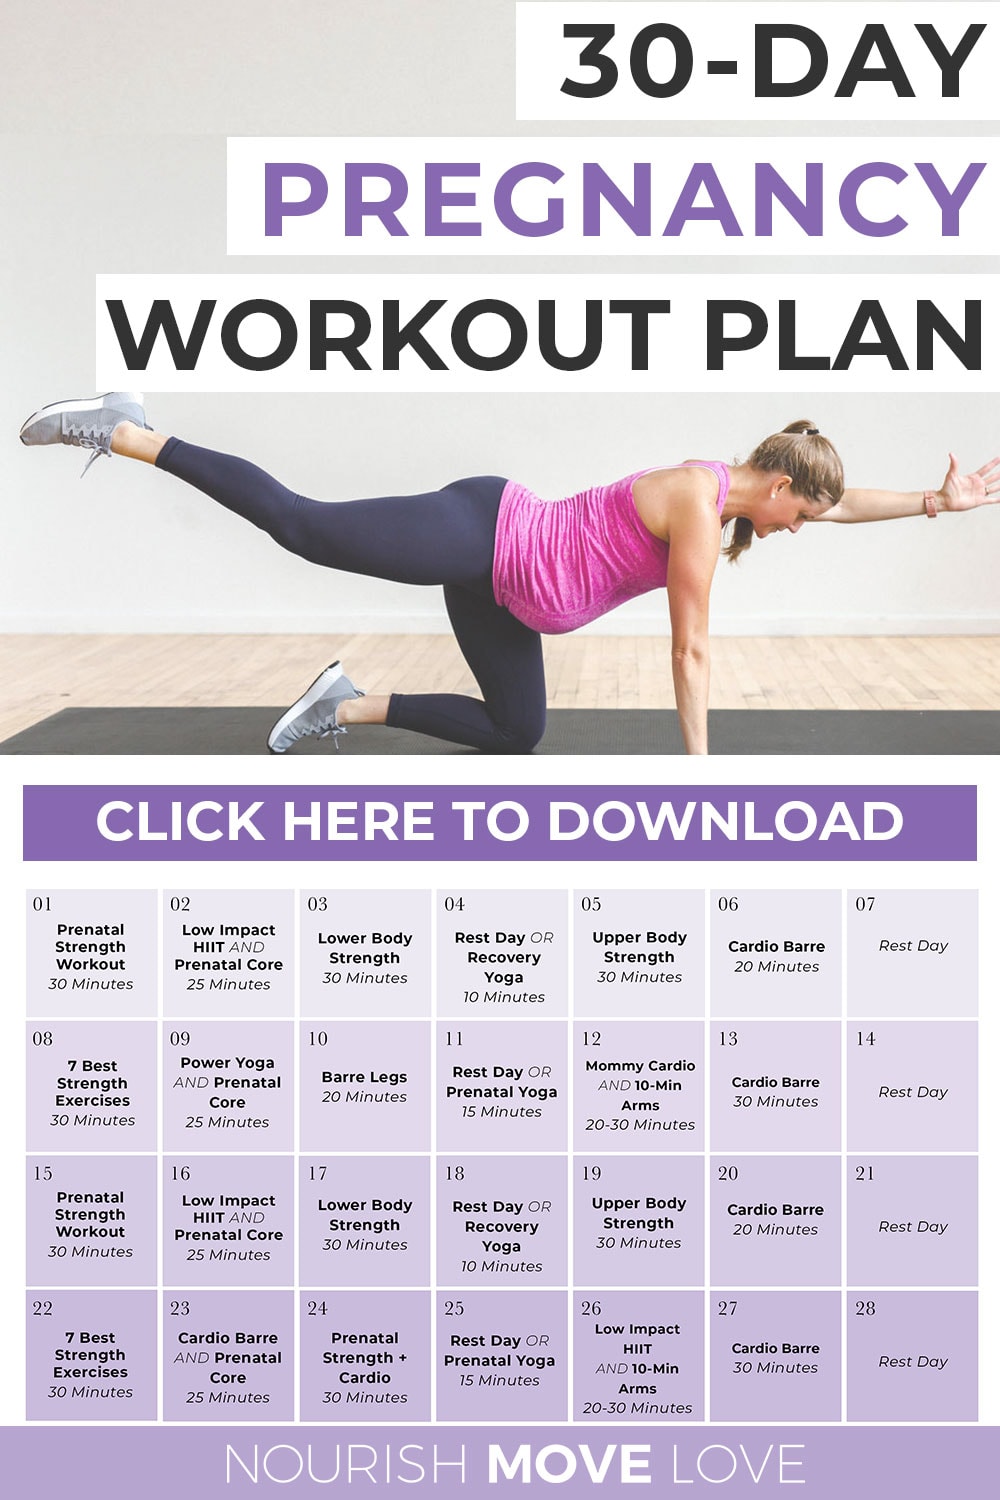 Free Pregnancy Workout Plan (by Trimester) | Nourish Move Love